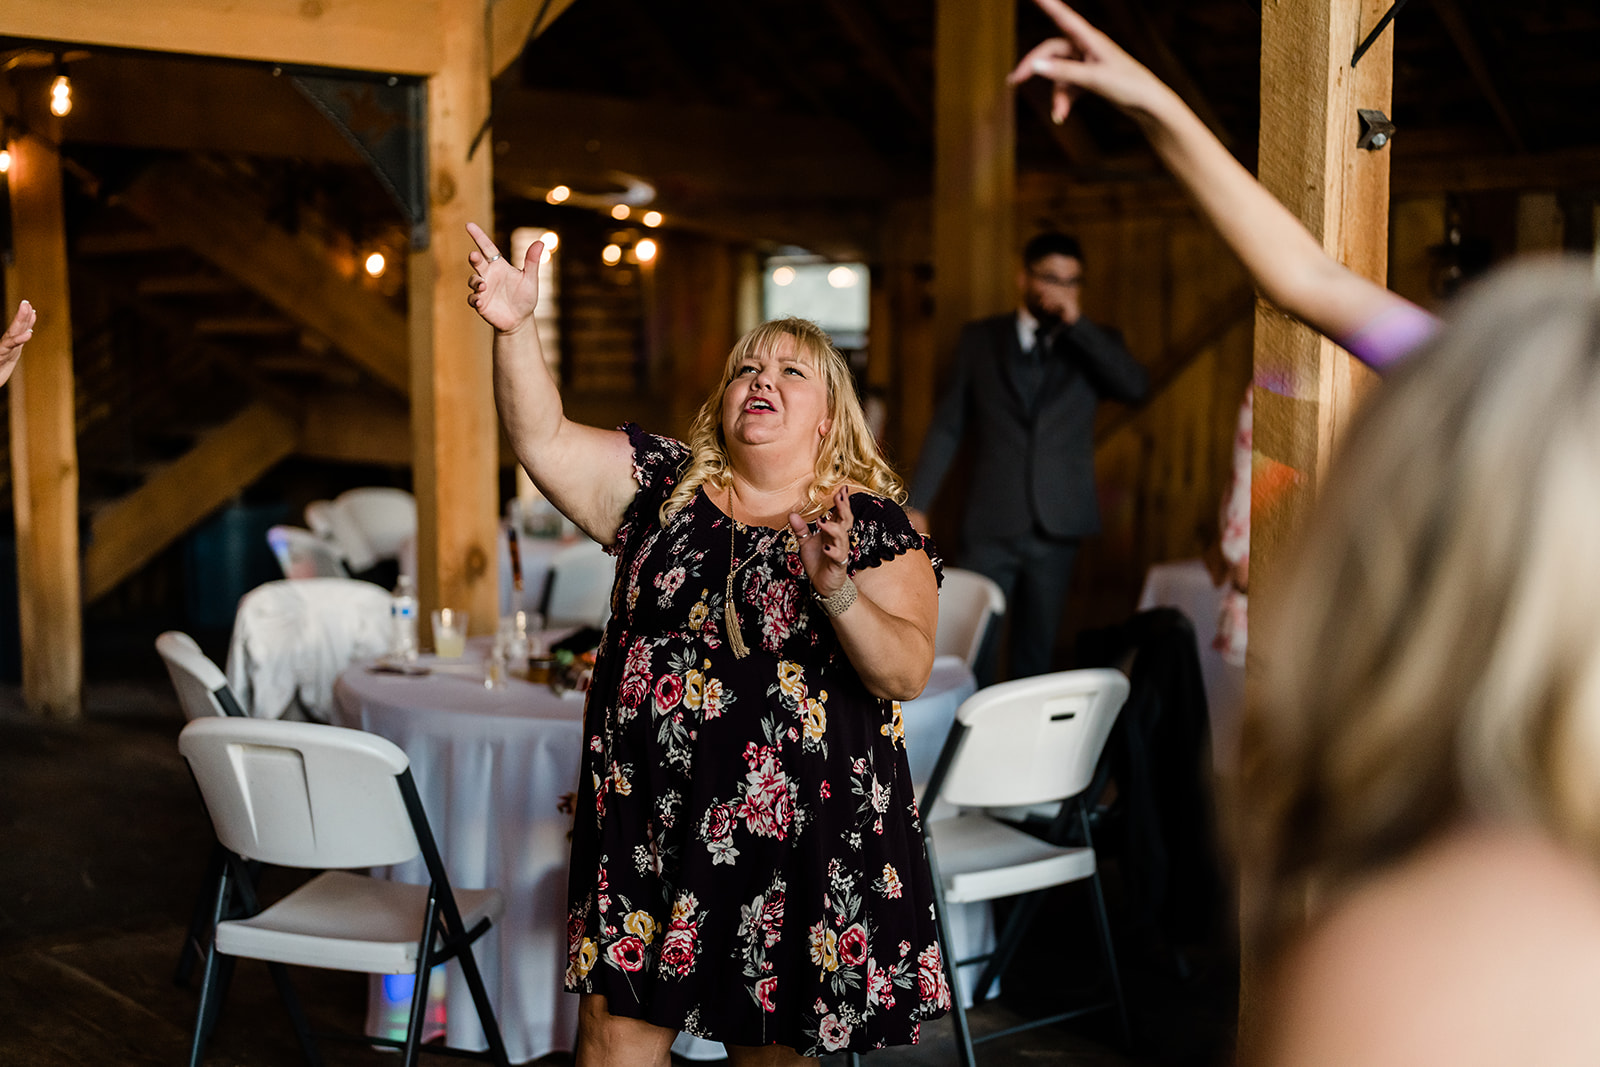 Woman dancing at a Cattle Barn Wedding